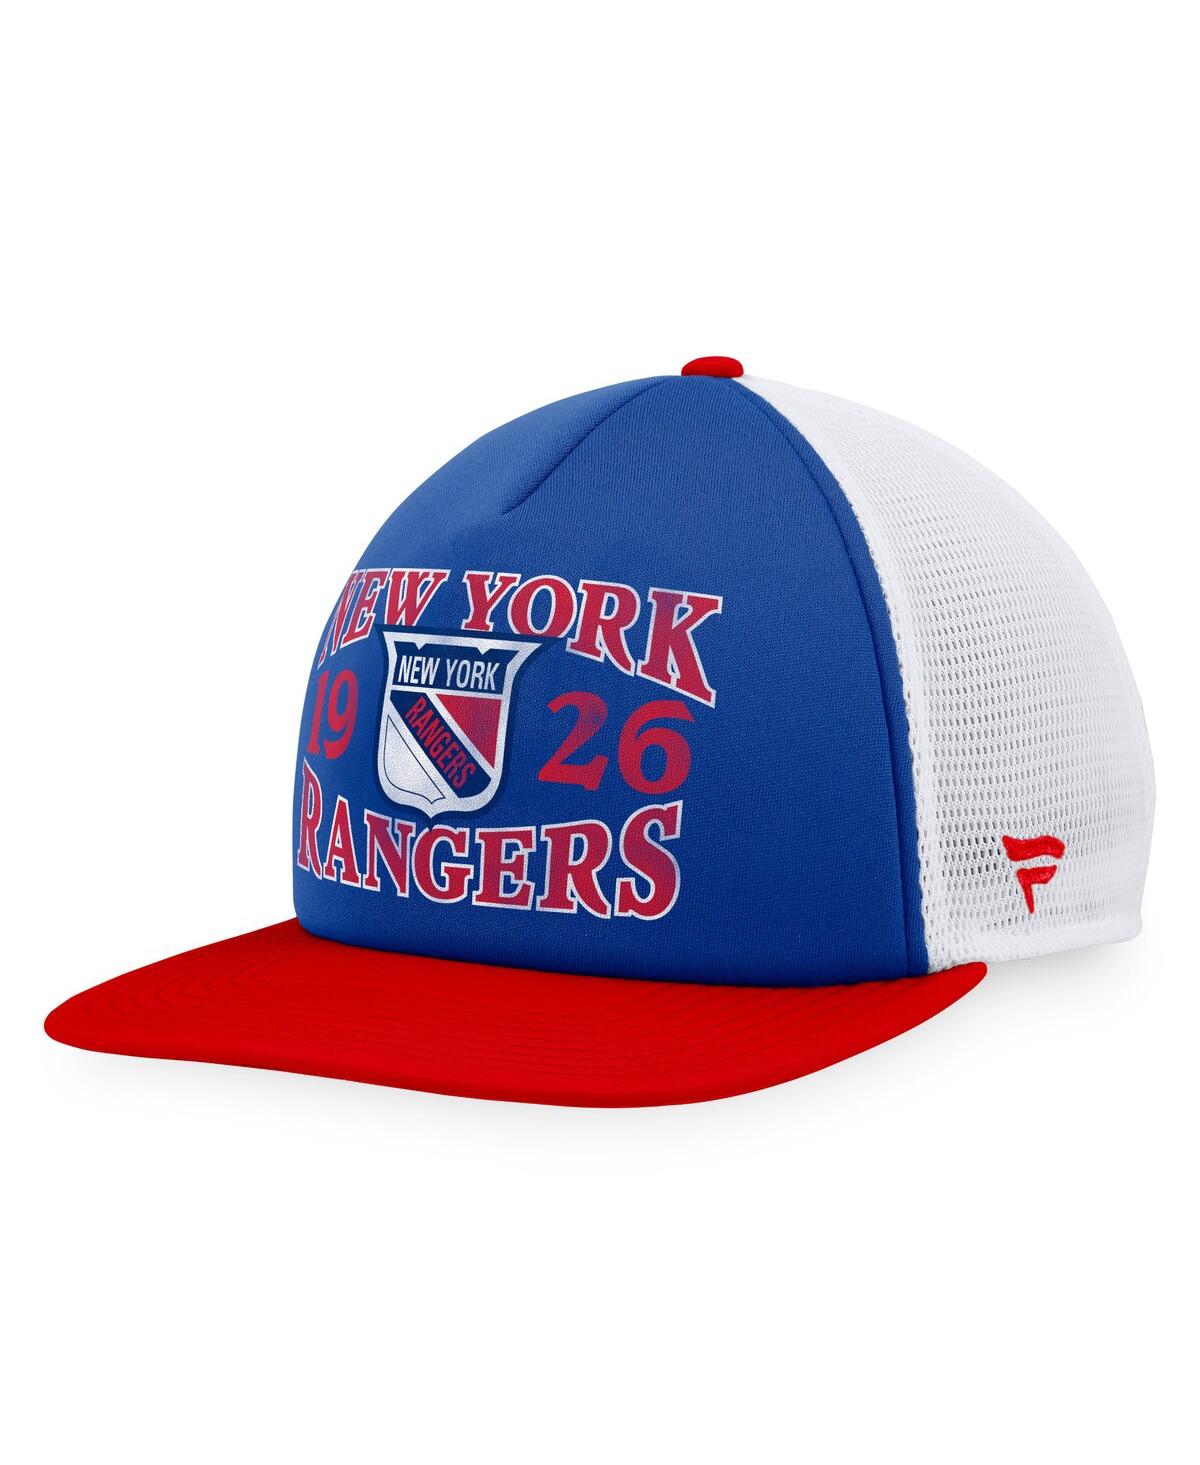 Branded Men's Blue/Red New York Rangers Heritage Vintage-Like Foam Front Trucker Snapback Hat - Dry/ar/wh